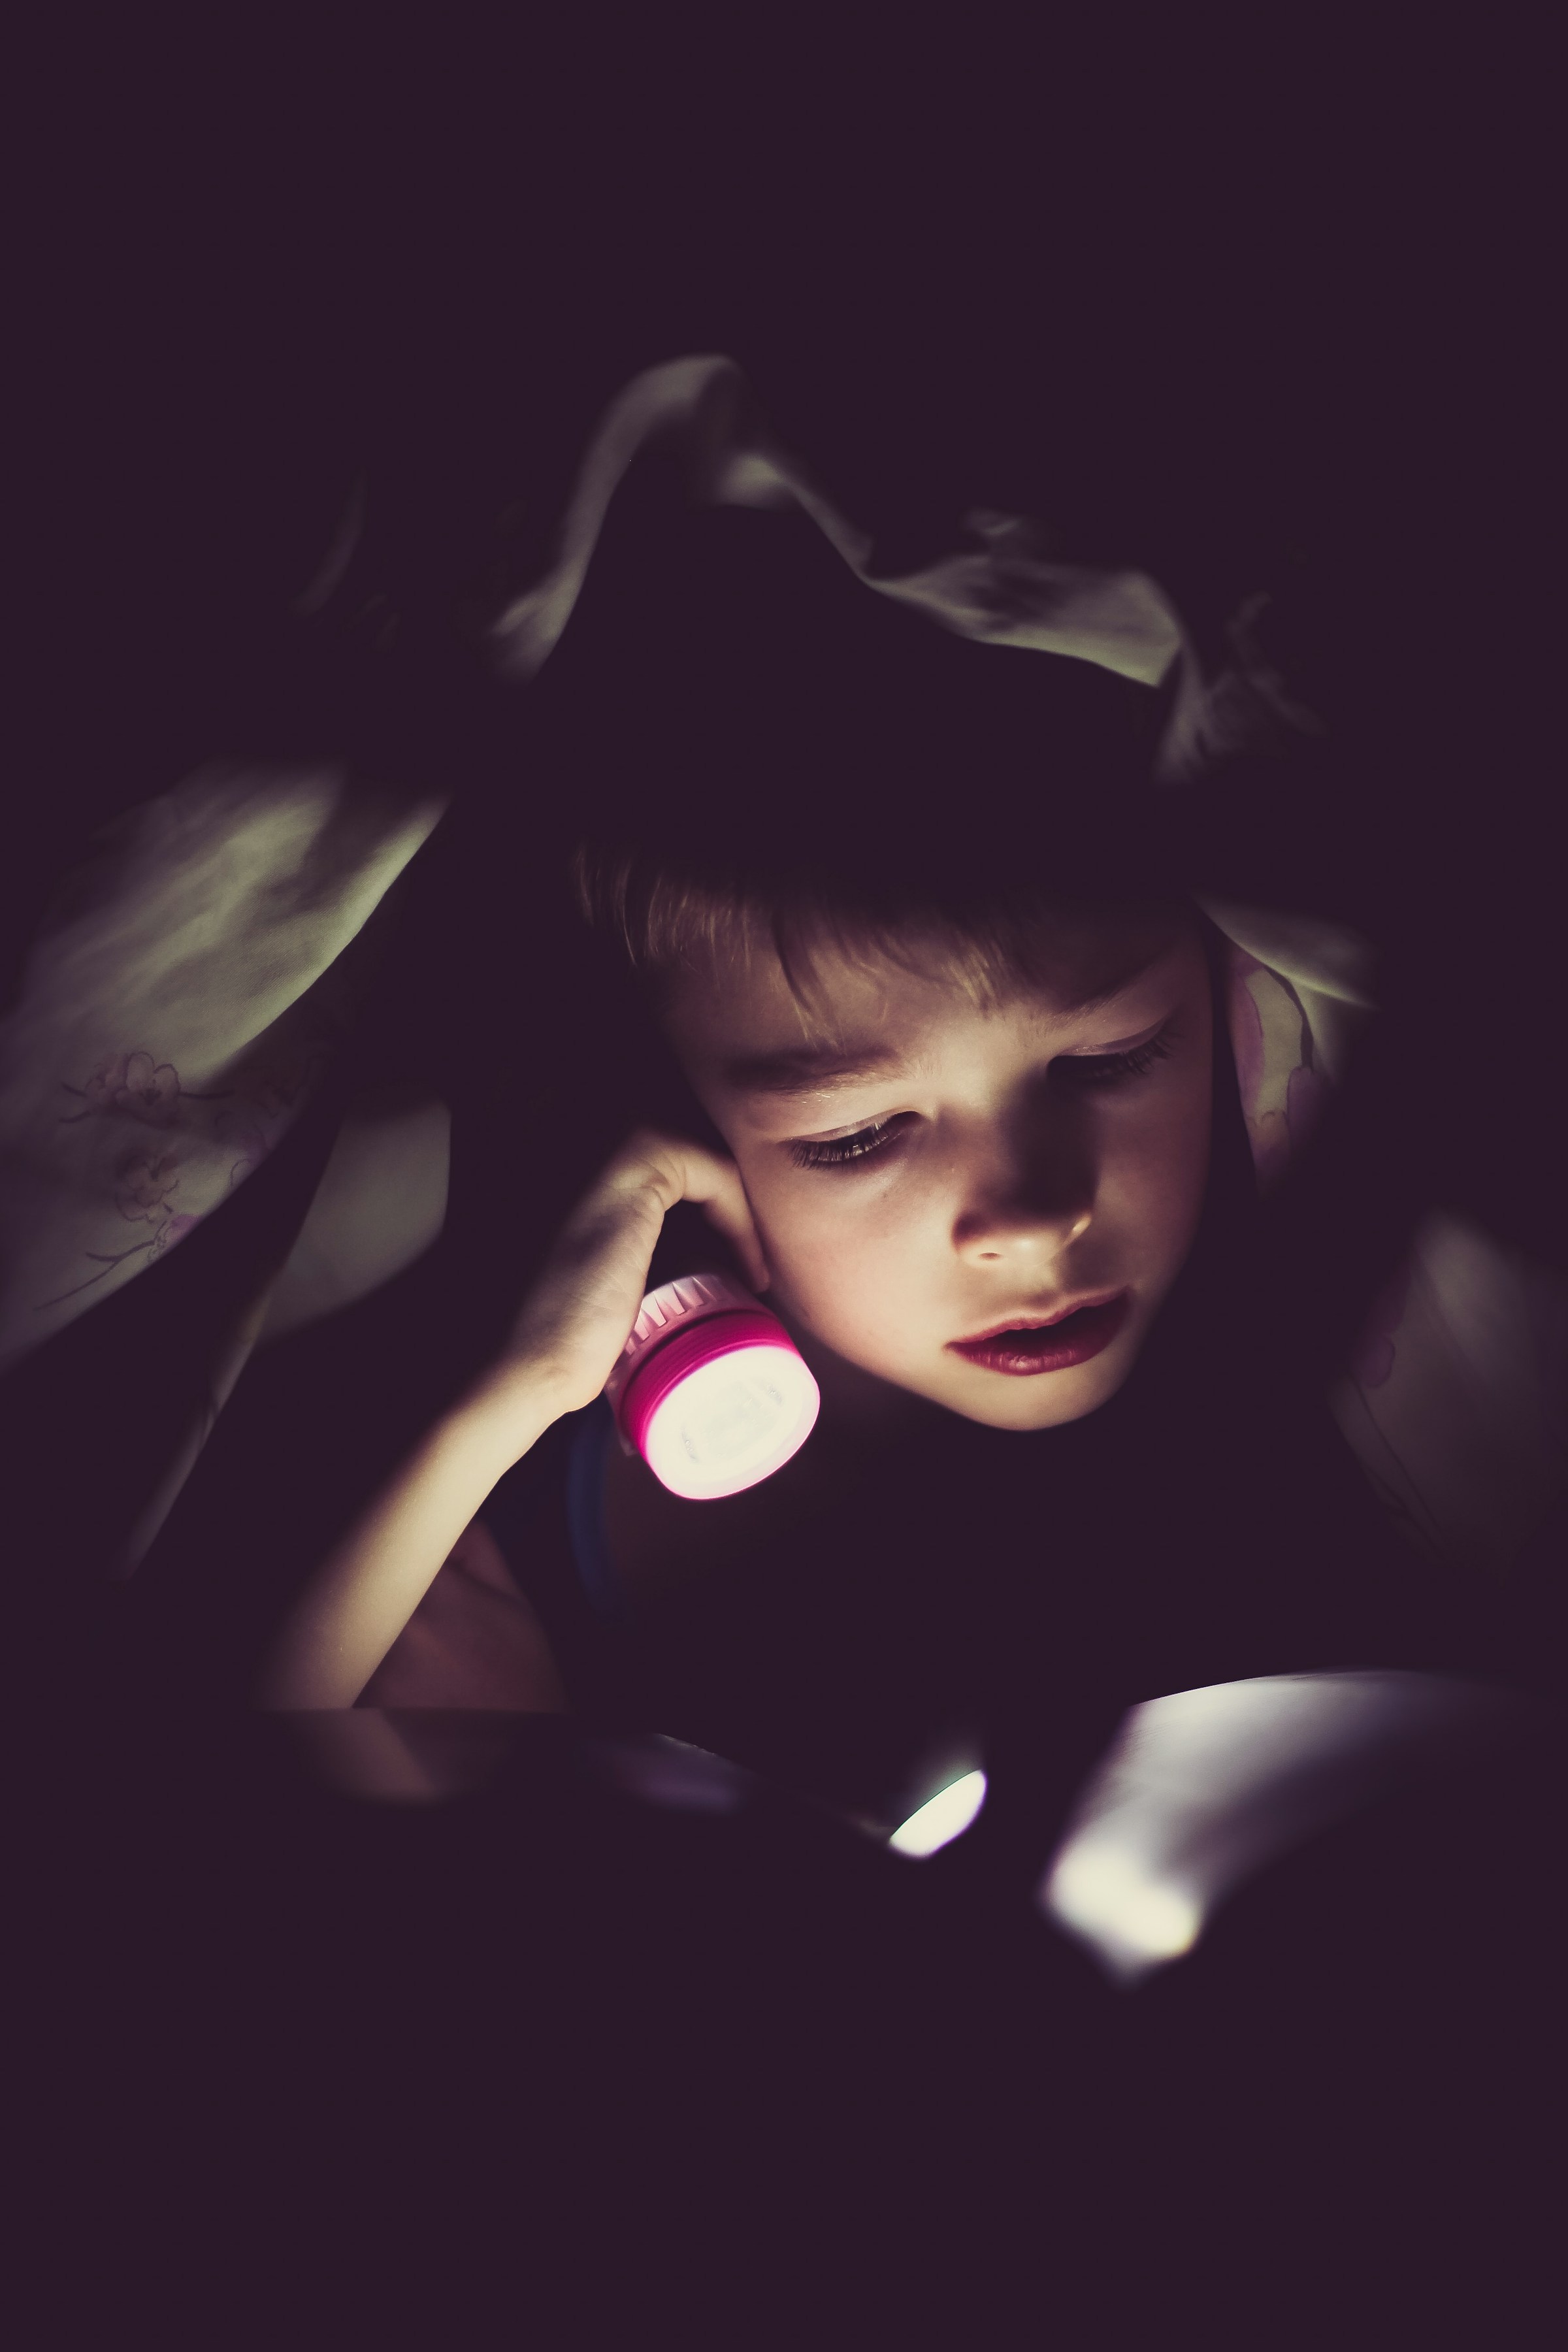 A little boy holding a flashlight | Source: Unsplash